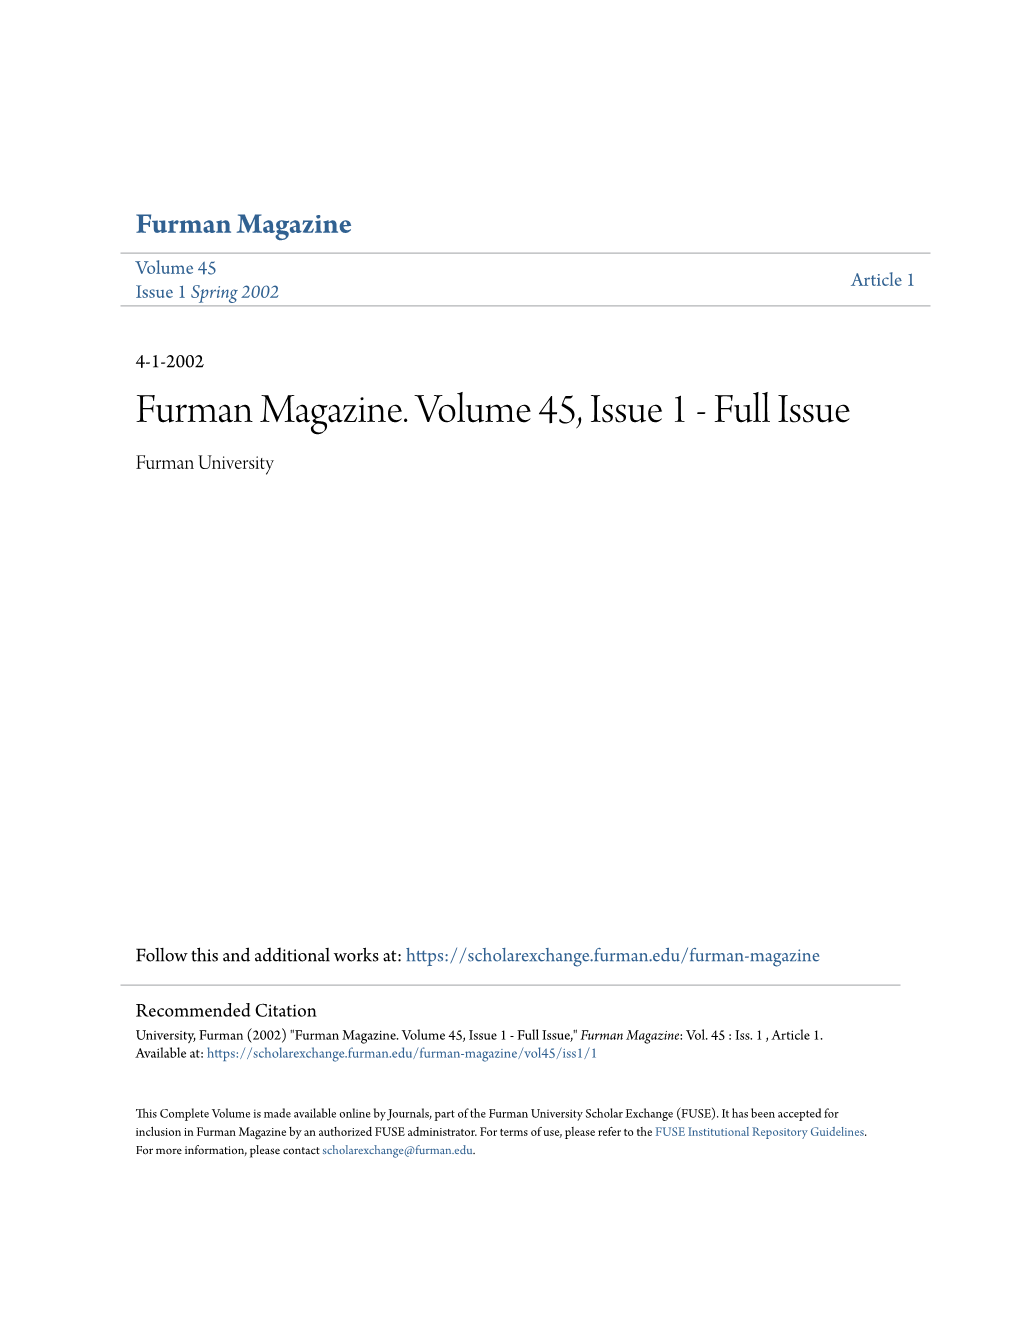 Furman Magazine. Volume 45, Issue 1 - Full Issue Furman University